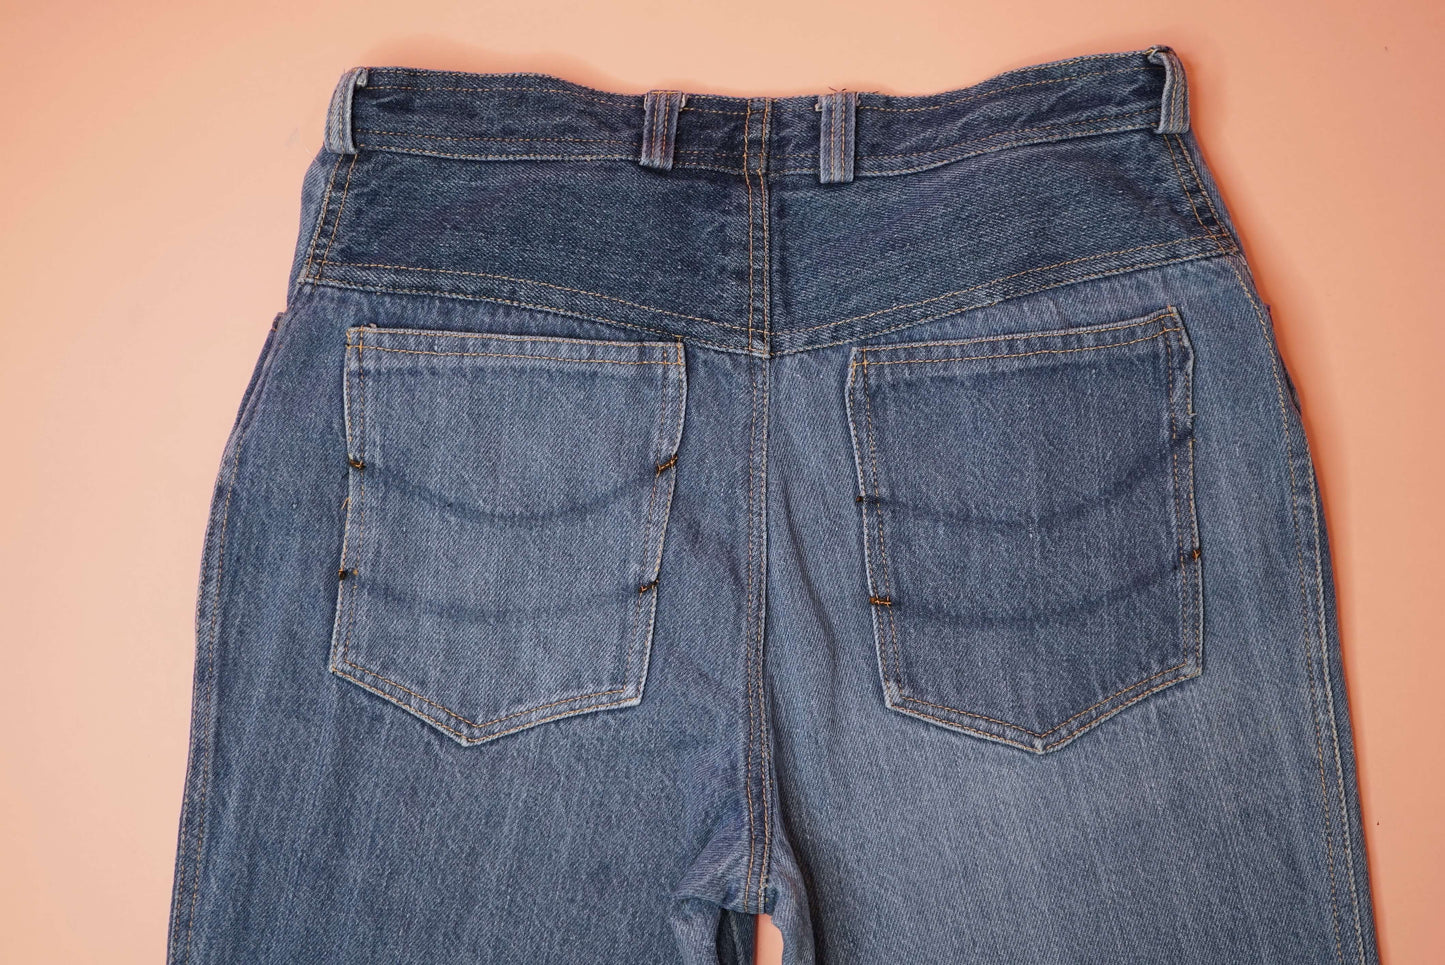 70s Wide Leg High Waisted Denim Jeans W25-26